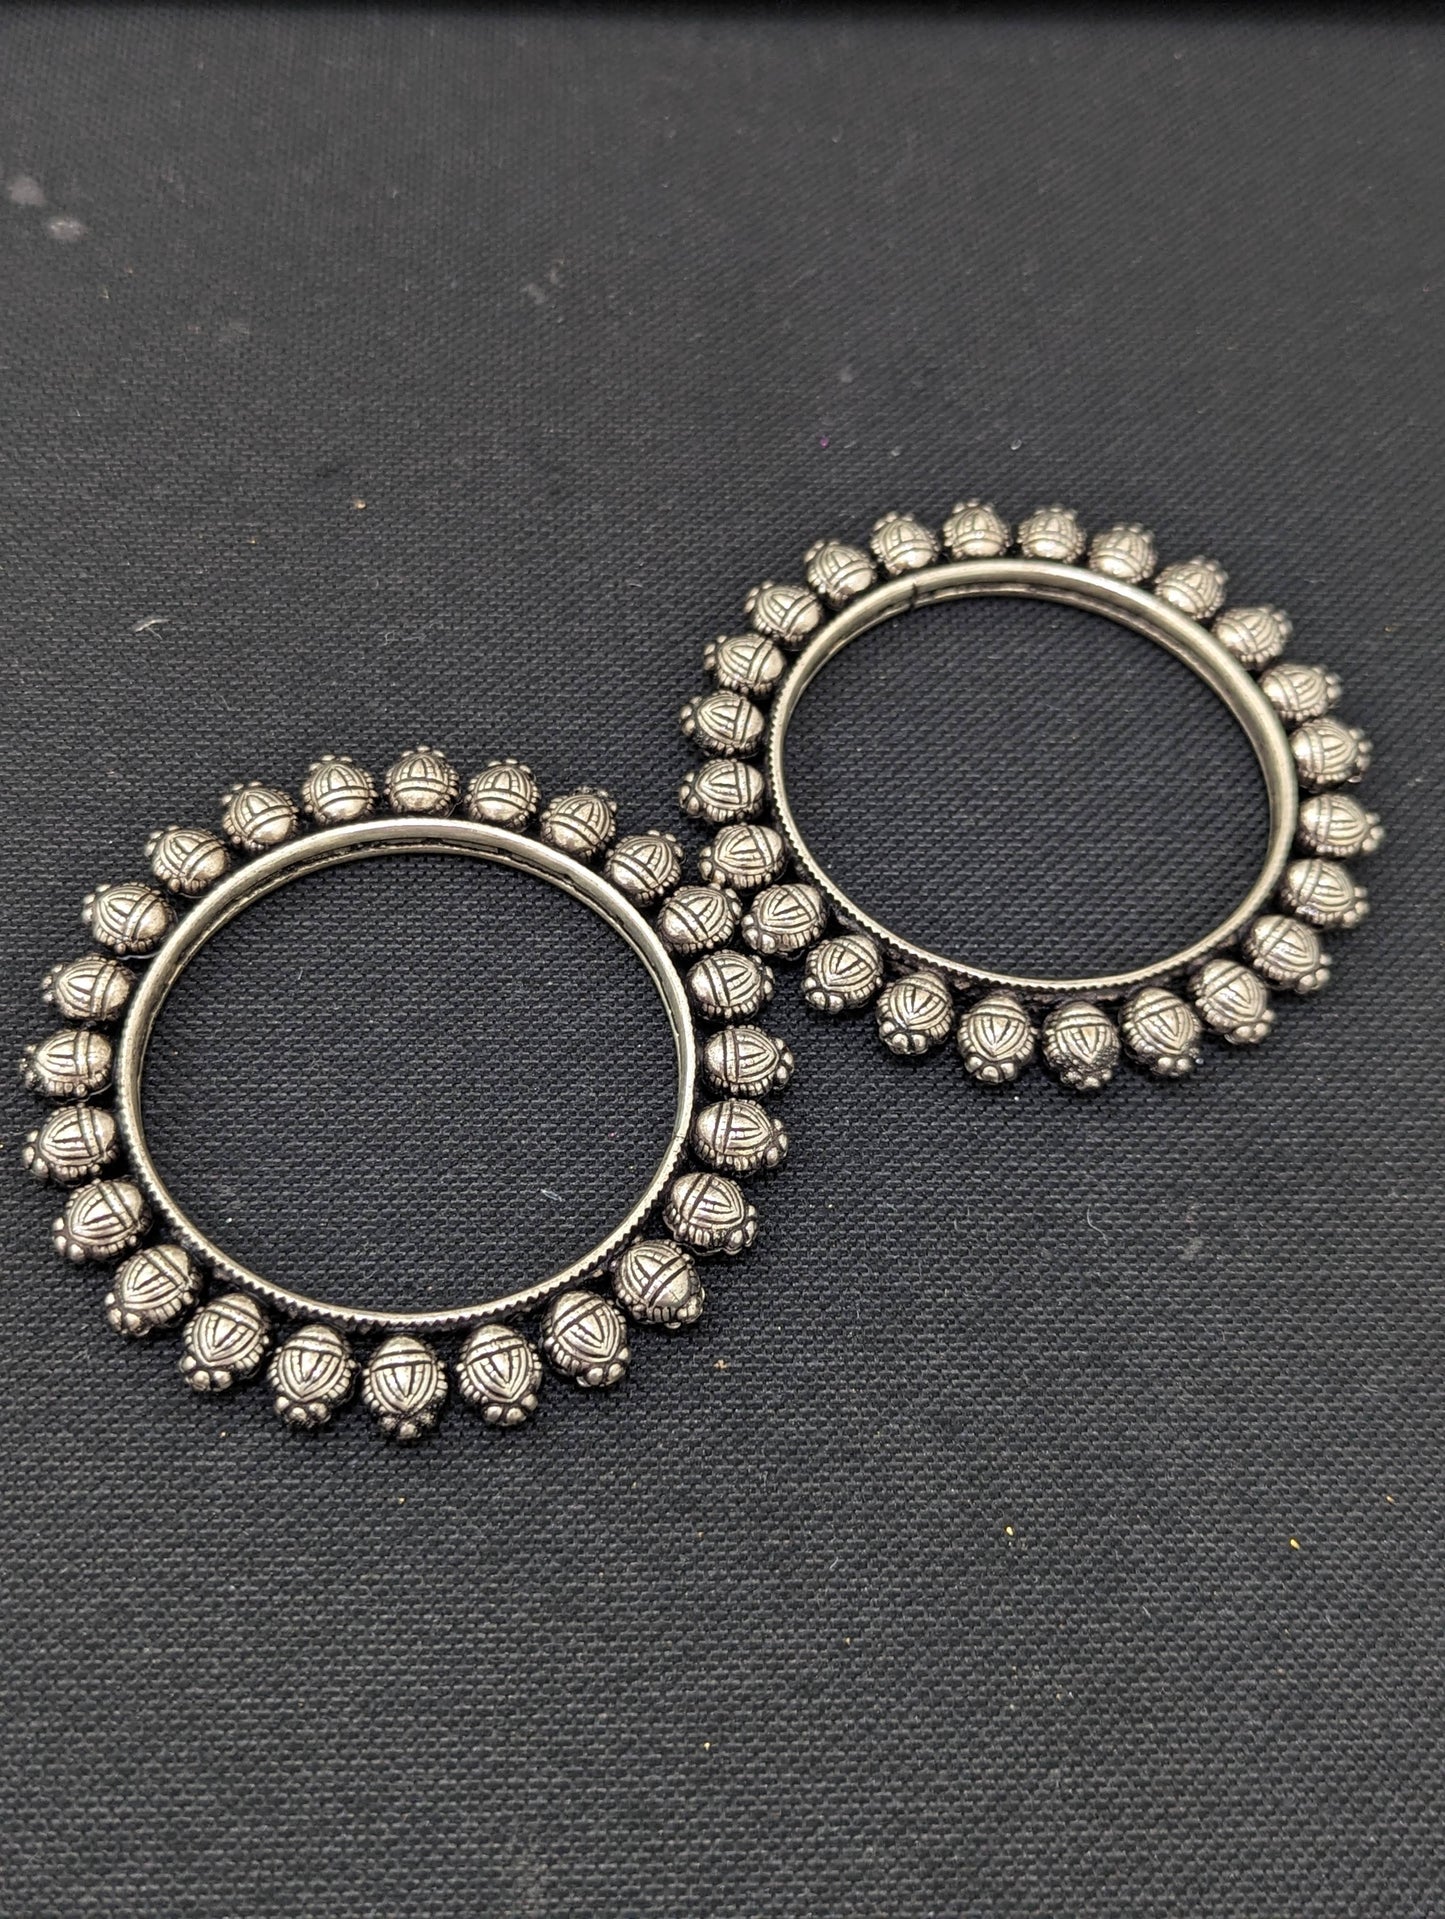 Oxidized silver pair bangles - Triangle design